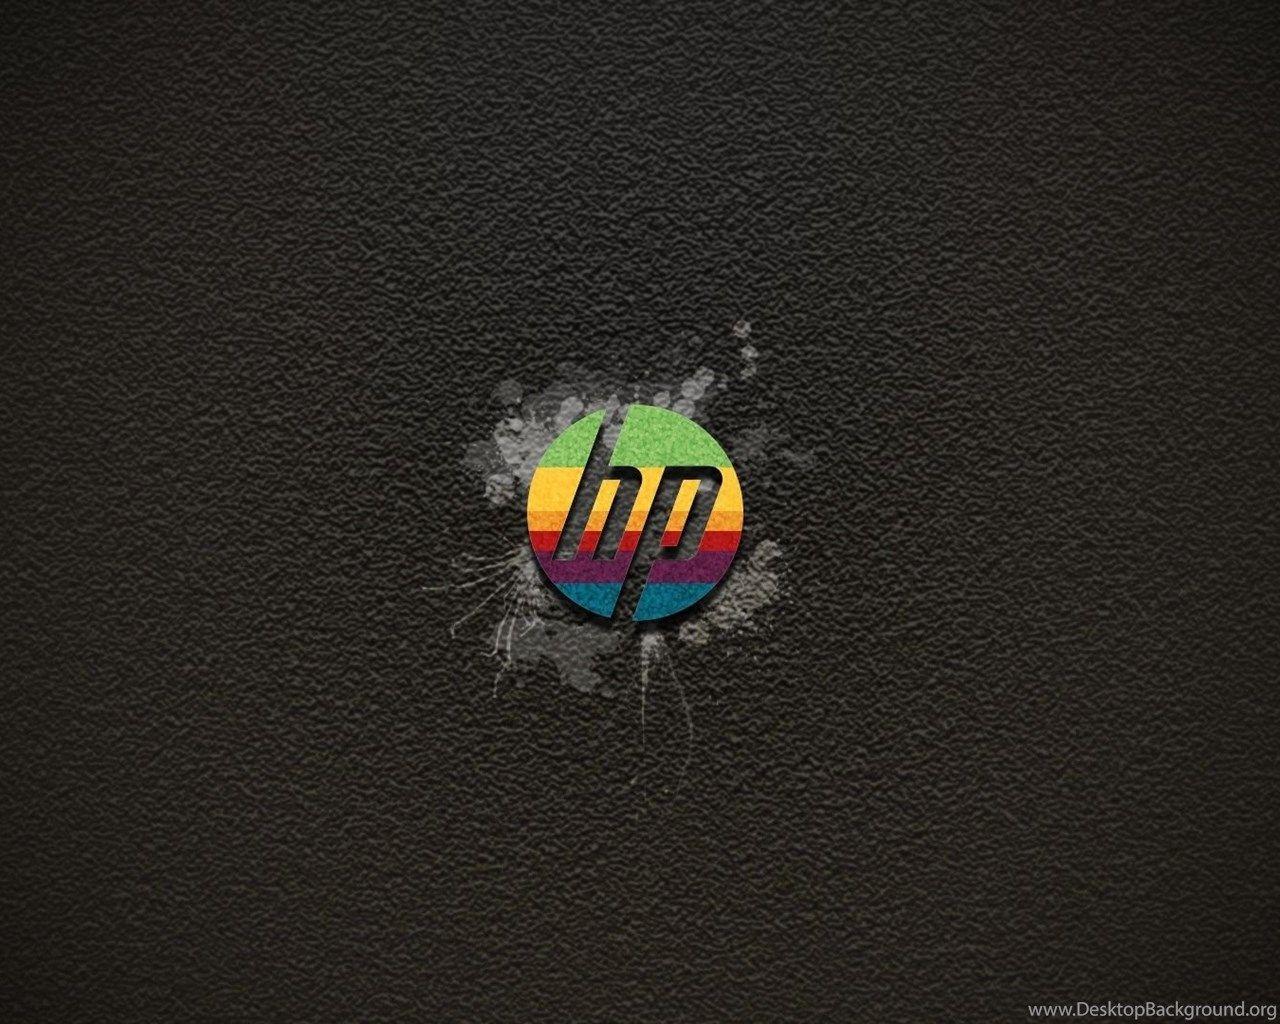 HP PC Logo - HP Color Logo Desktop PC And Mac Wallpaper Desktop Background